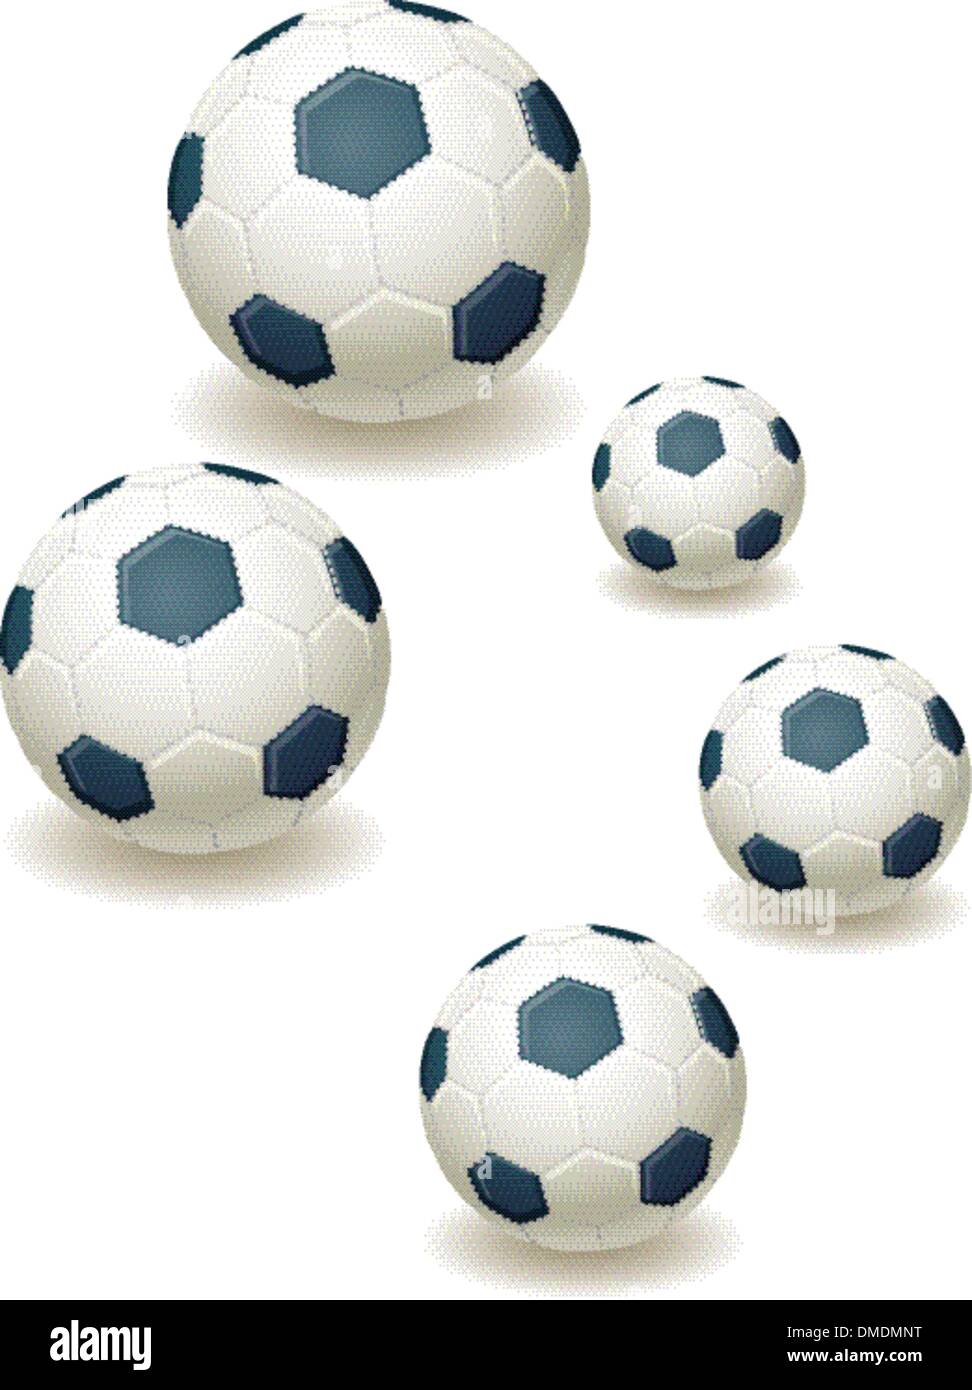 Pelotas de fútbol de tamaño diferente Imagen Vector de stock - Alamy